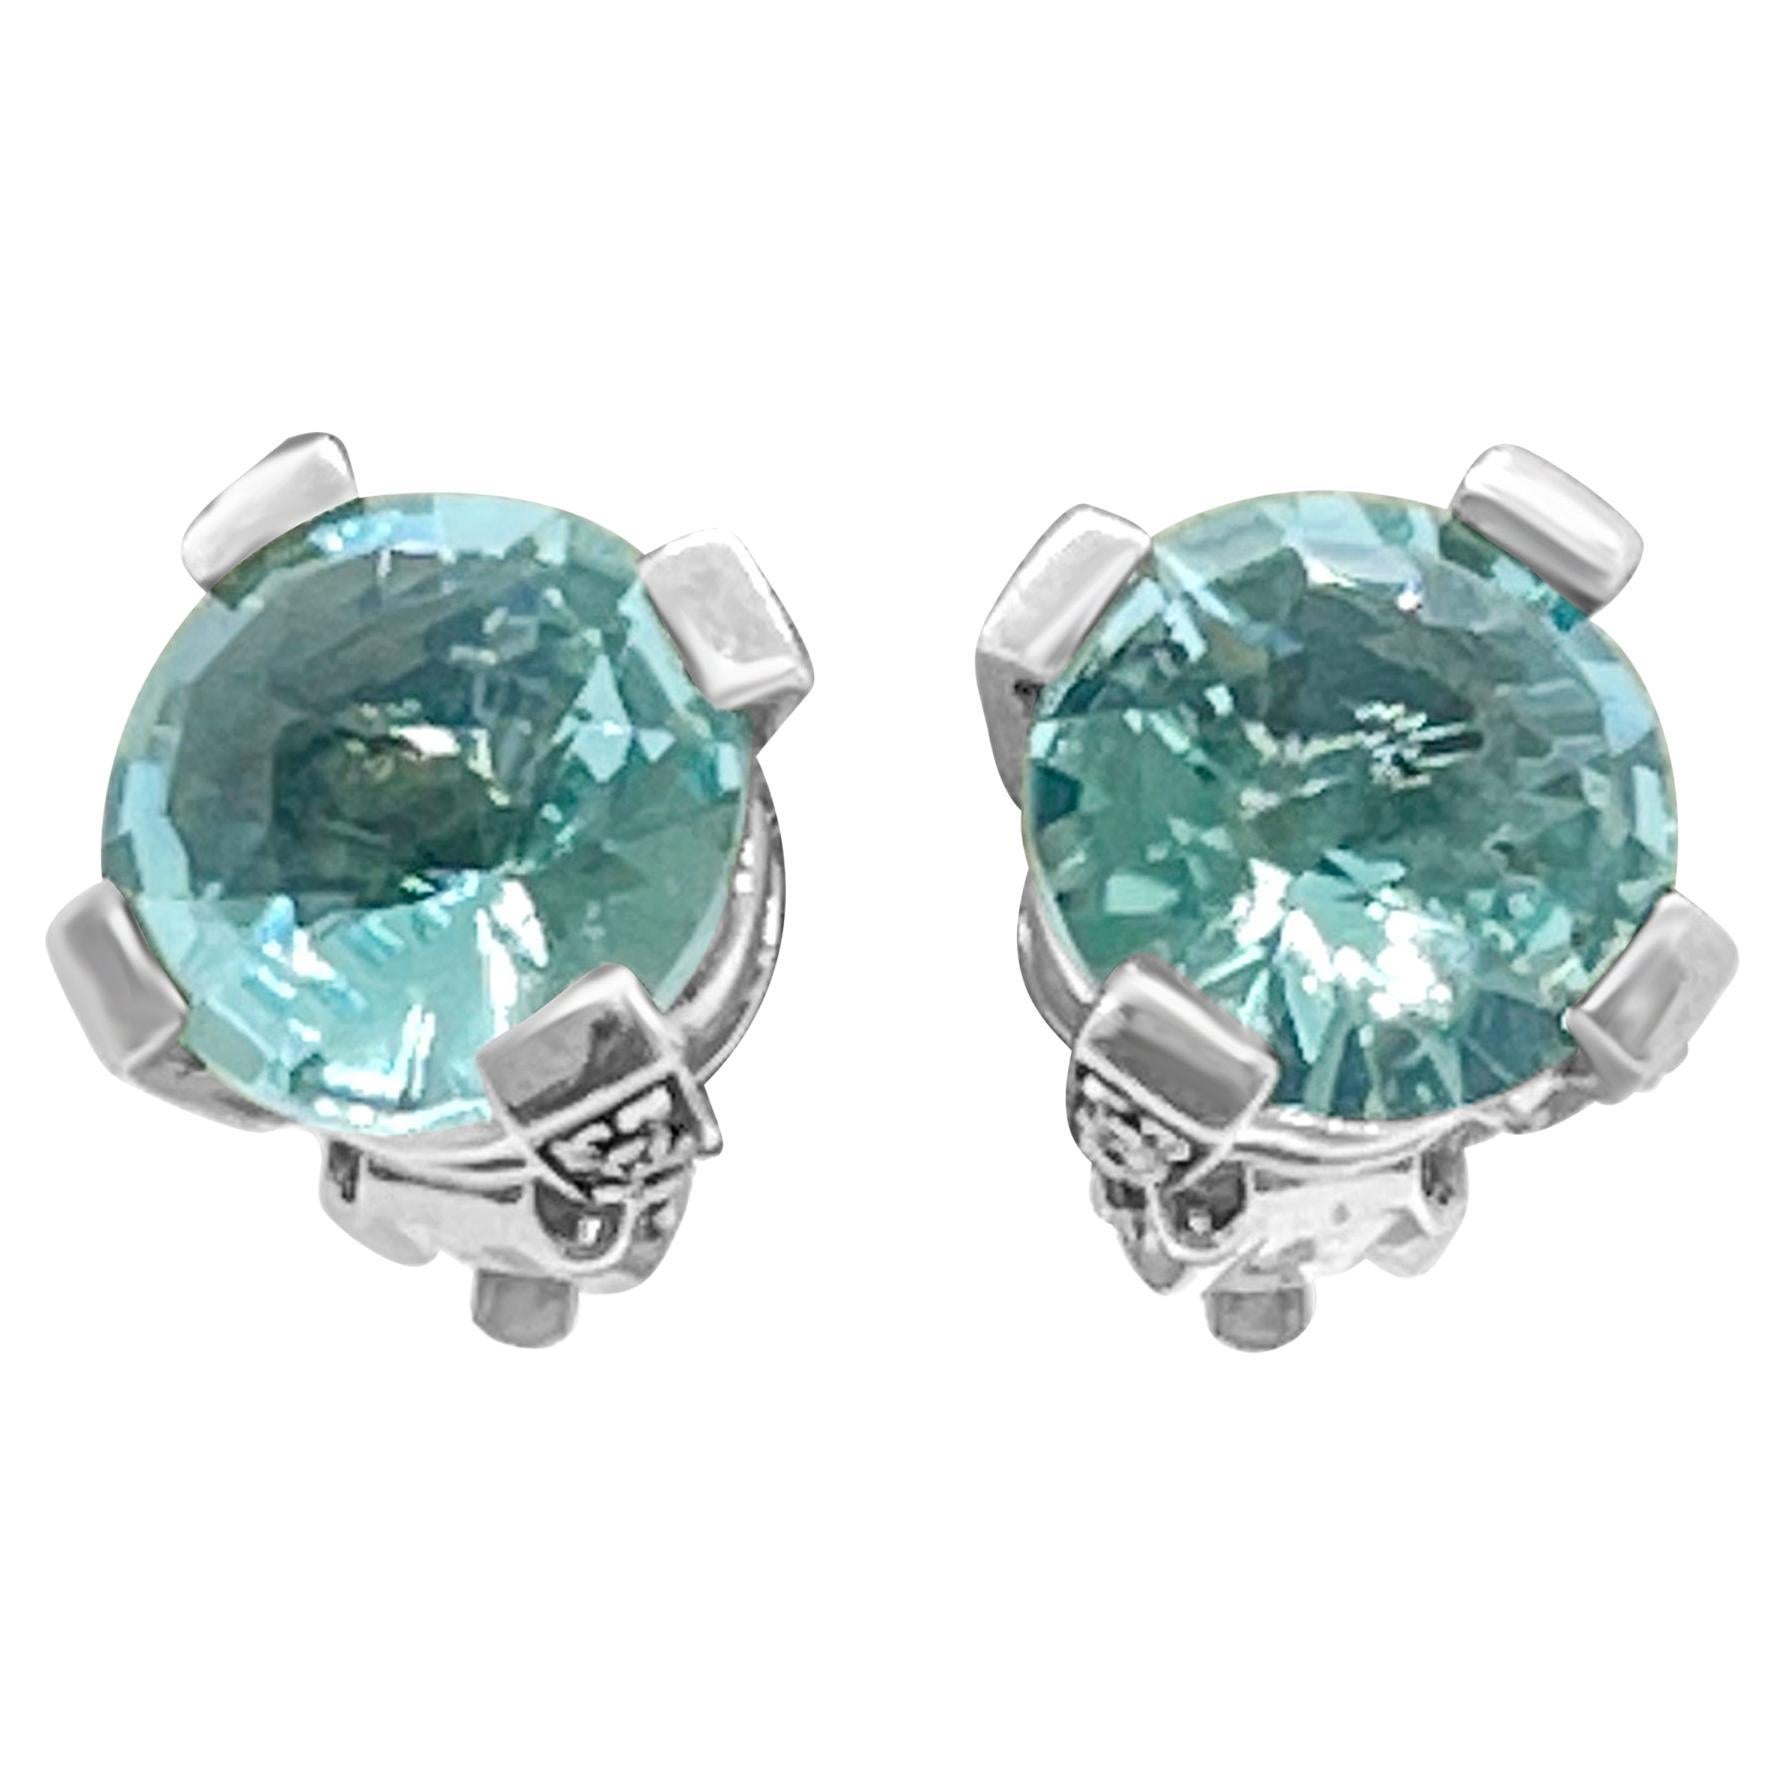 Hydro Aquamarine Earrings in Sterling Silver